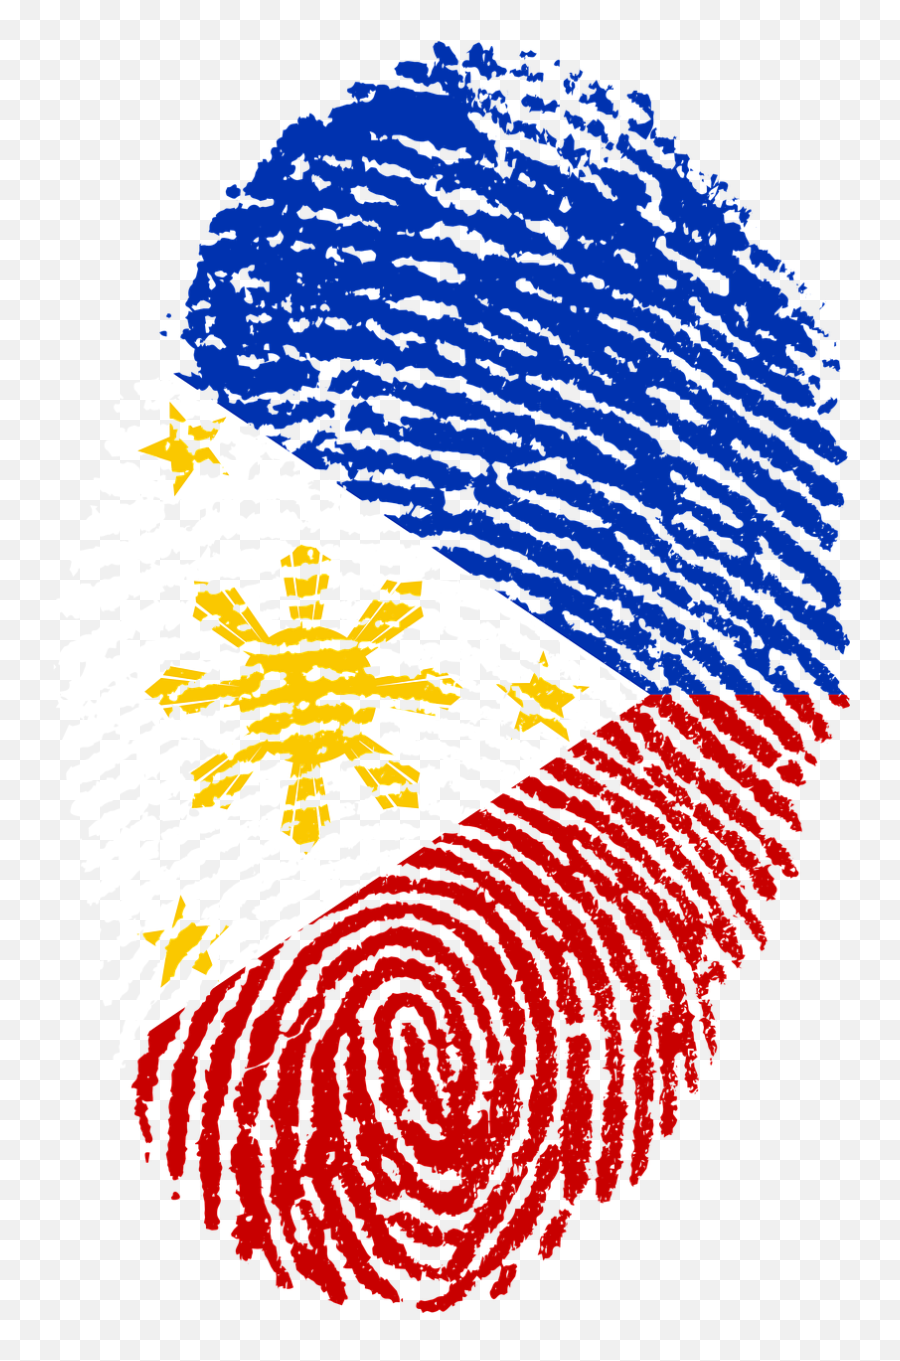 Philippines Flag Fingerprint - Free Image On Pixabay Philippine Flag Fingerprint Png,Thumb Print Png